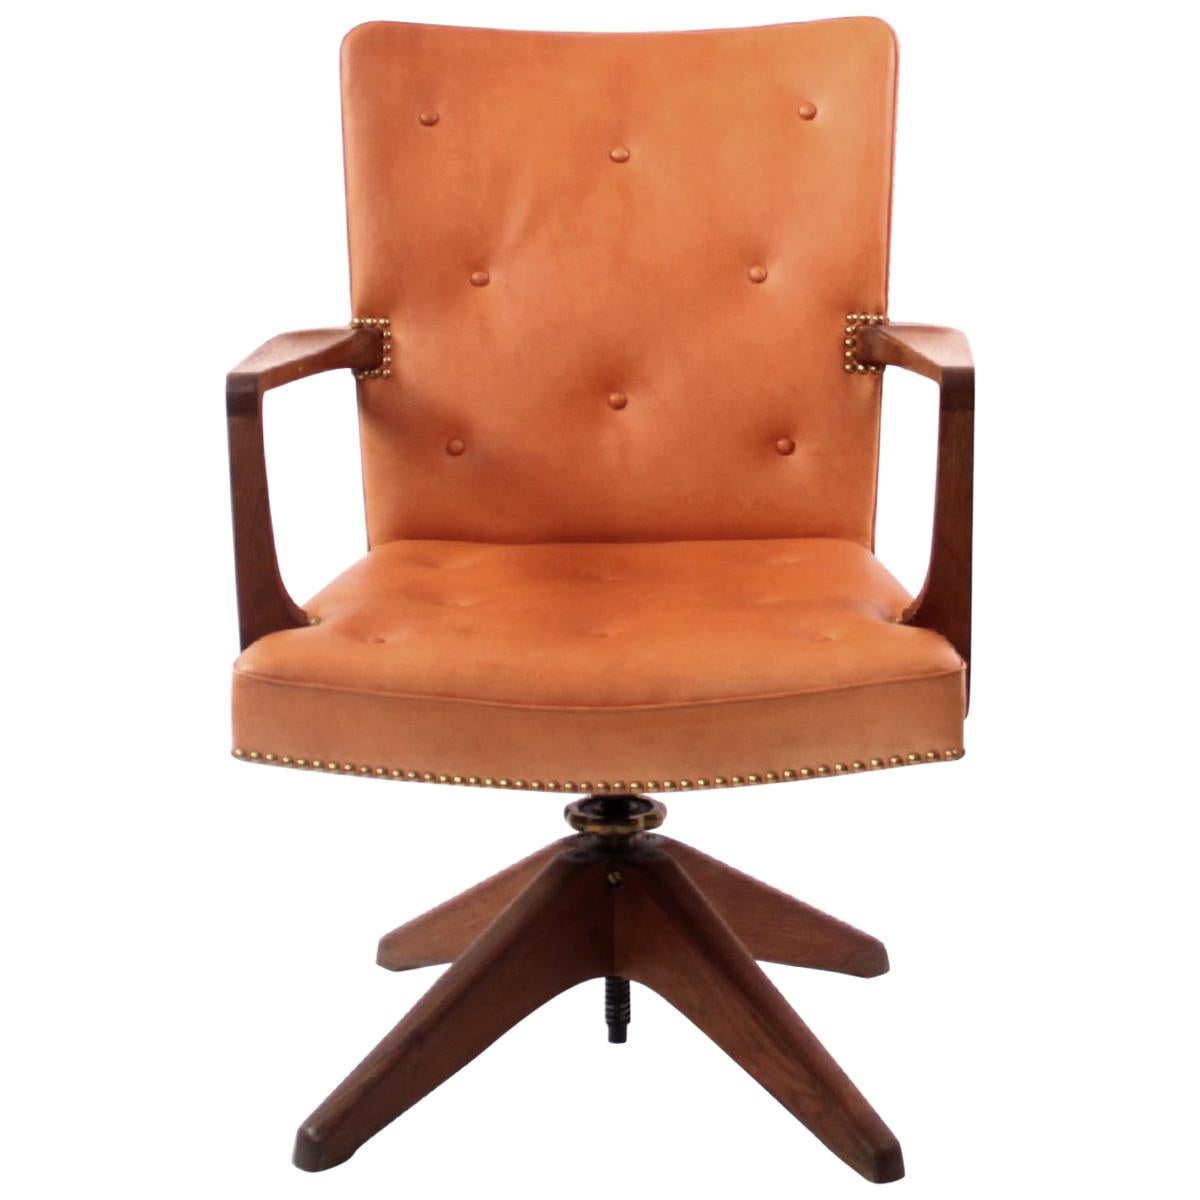 Palle Suenson, Rare Executive Desk Chair in Walnut, Brass and Leather, 1940s